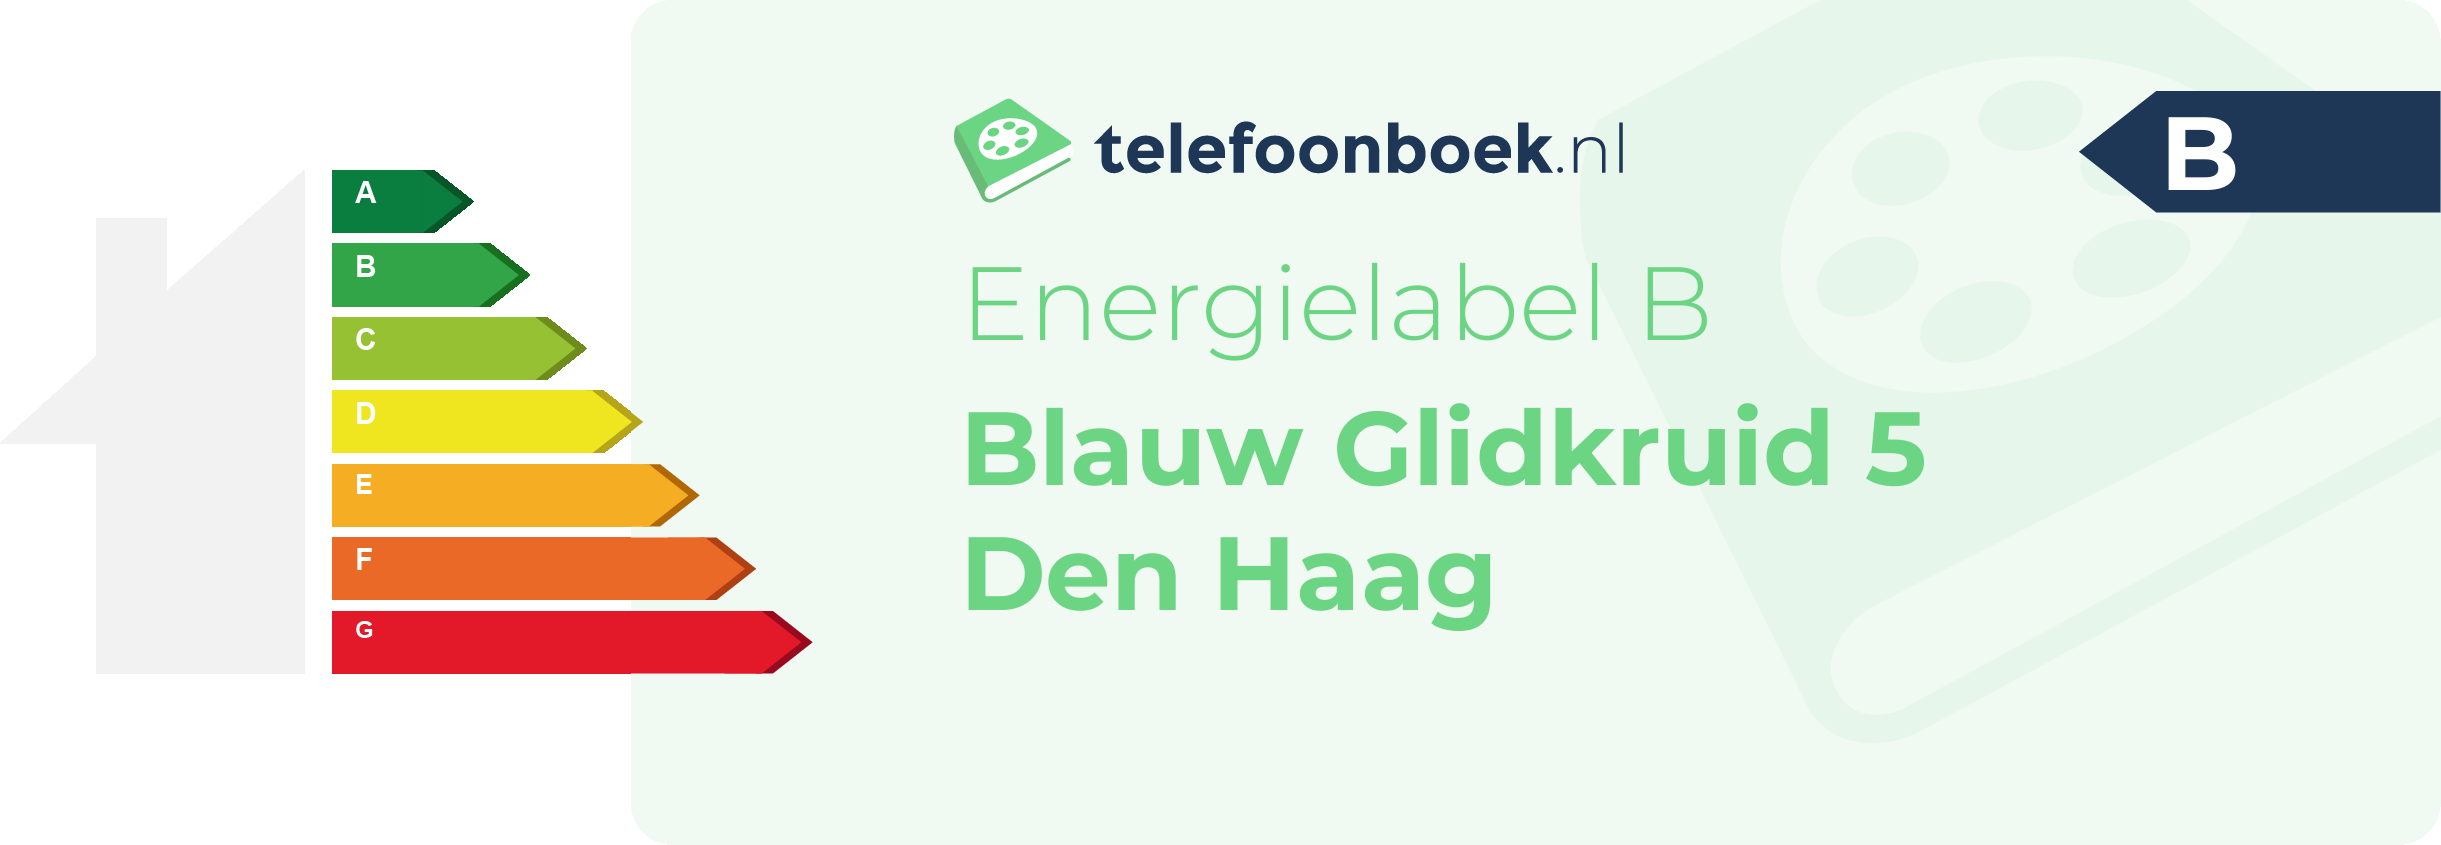 Energielabel Blauw Glidkruid 5 Den Haag